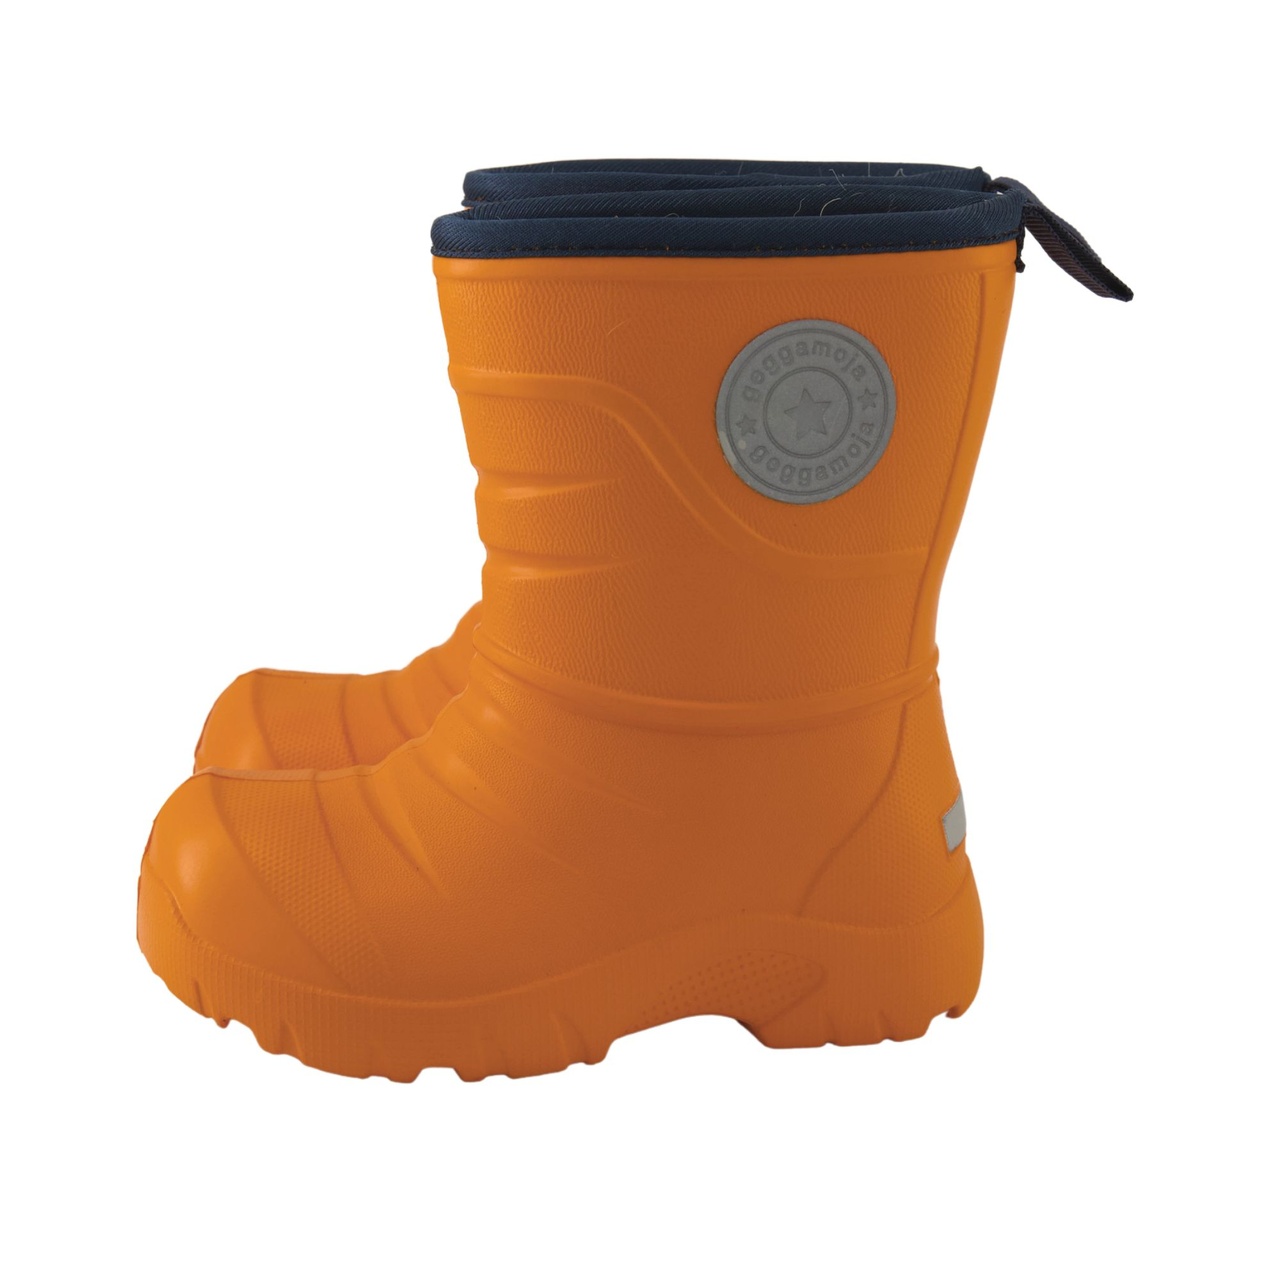 All-weather Boot Orange 30 (19 cm)